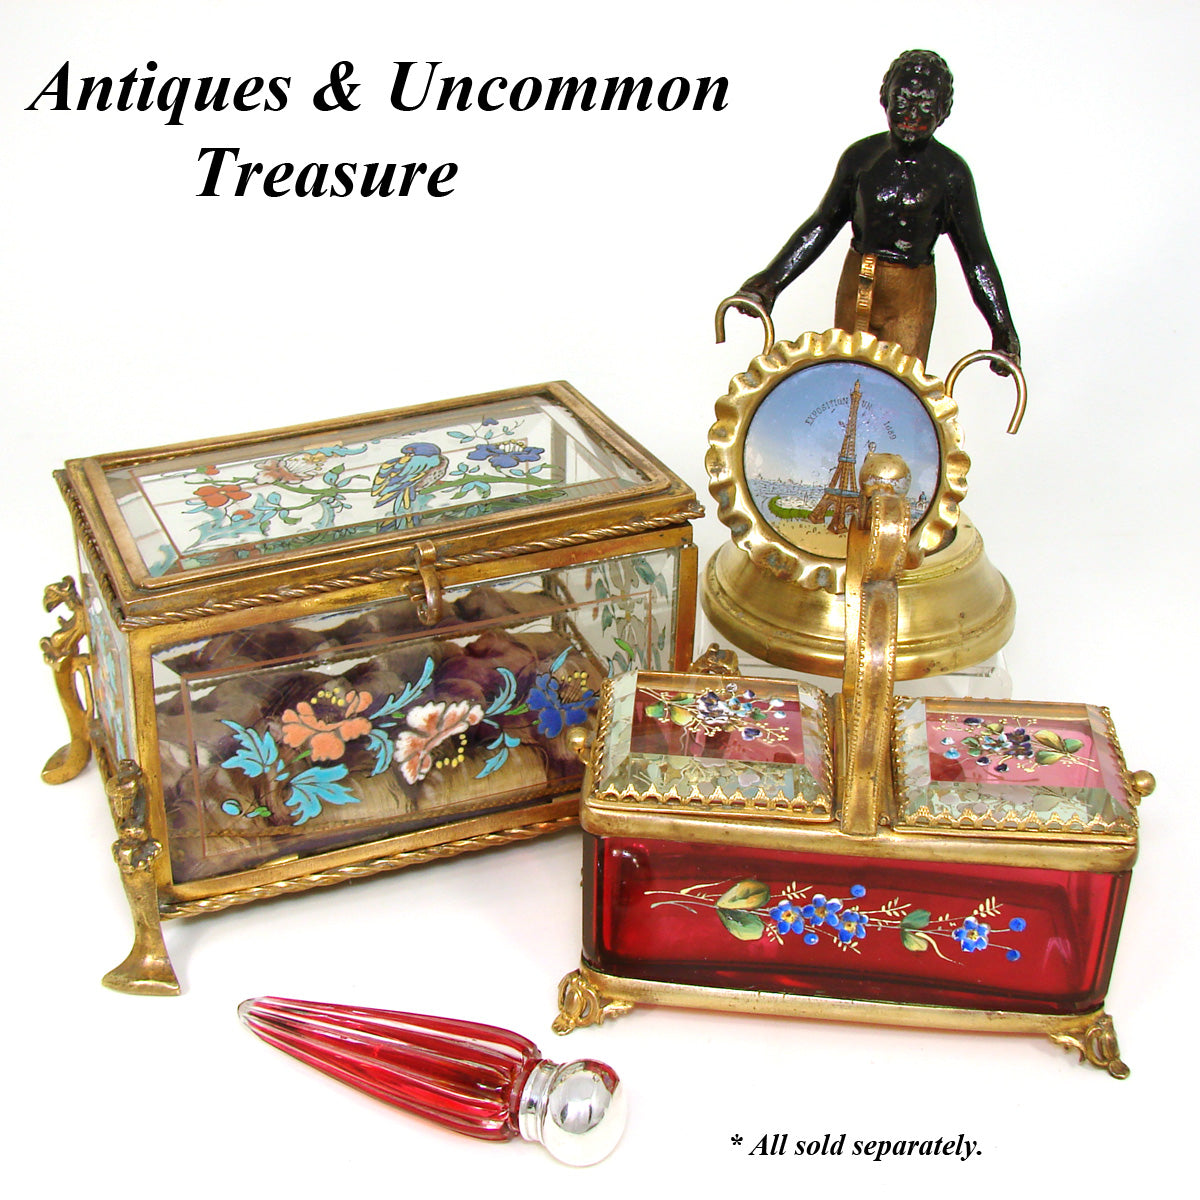 Antique French Napoleon III Era LeGras(?) Bronze & Enameled Glass Jewelry Casket, Marked "Marquis"